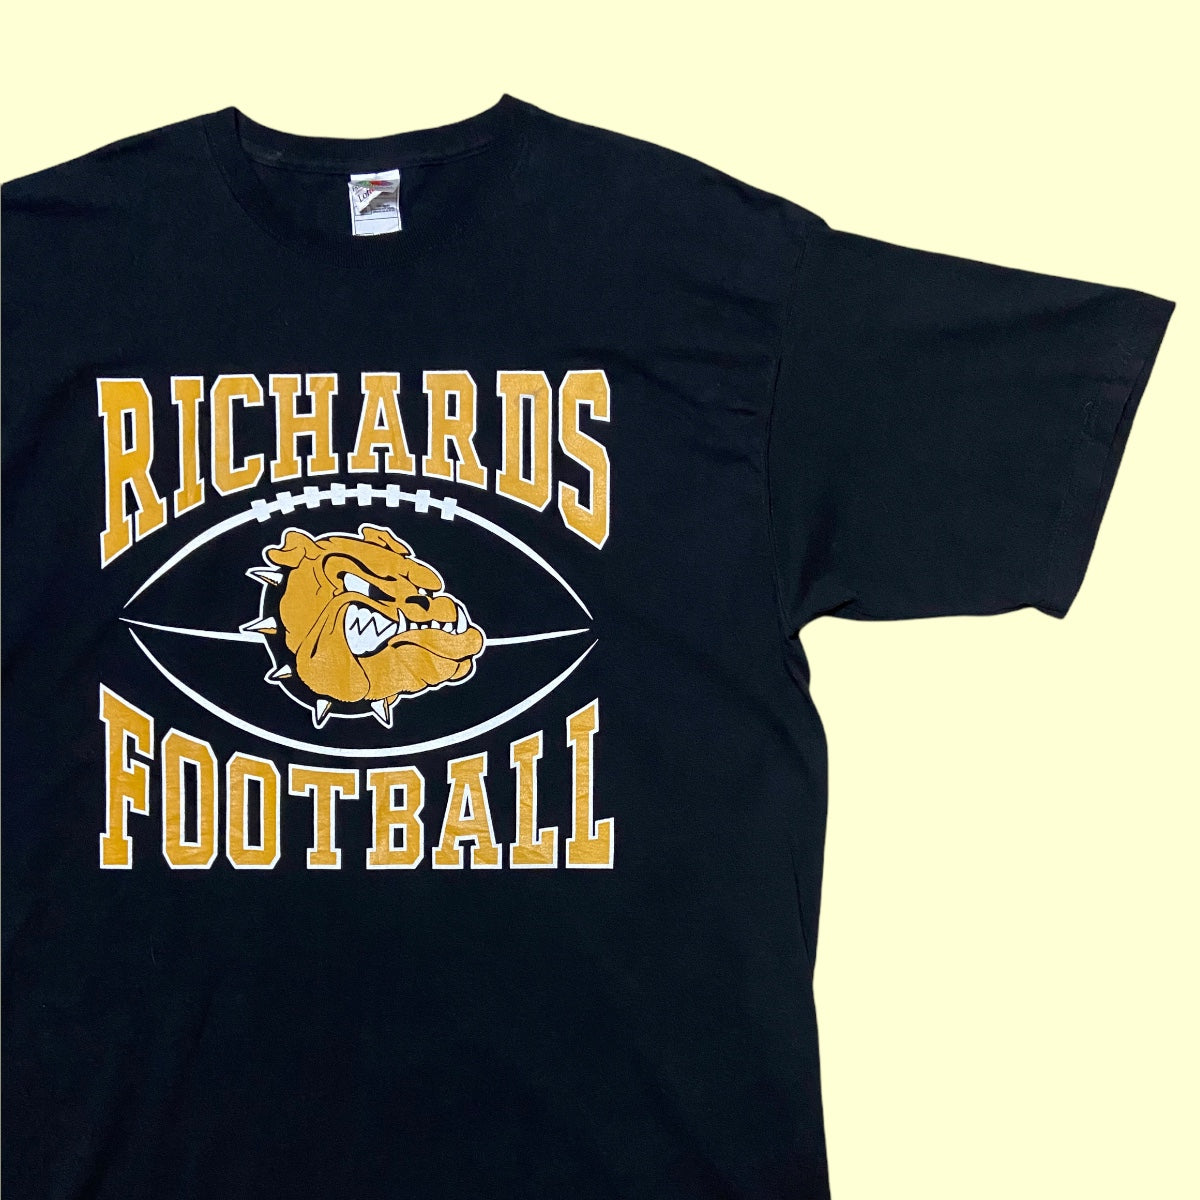 Richards Football T-Shirt - 2XL